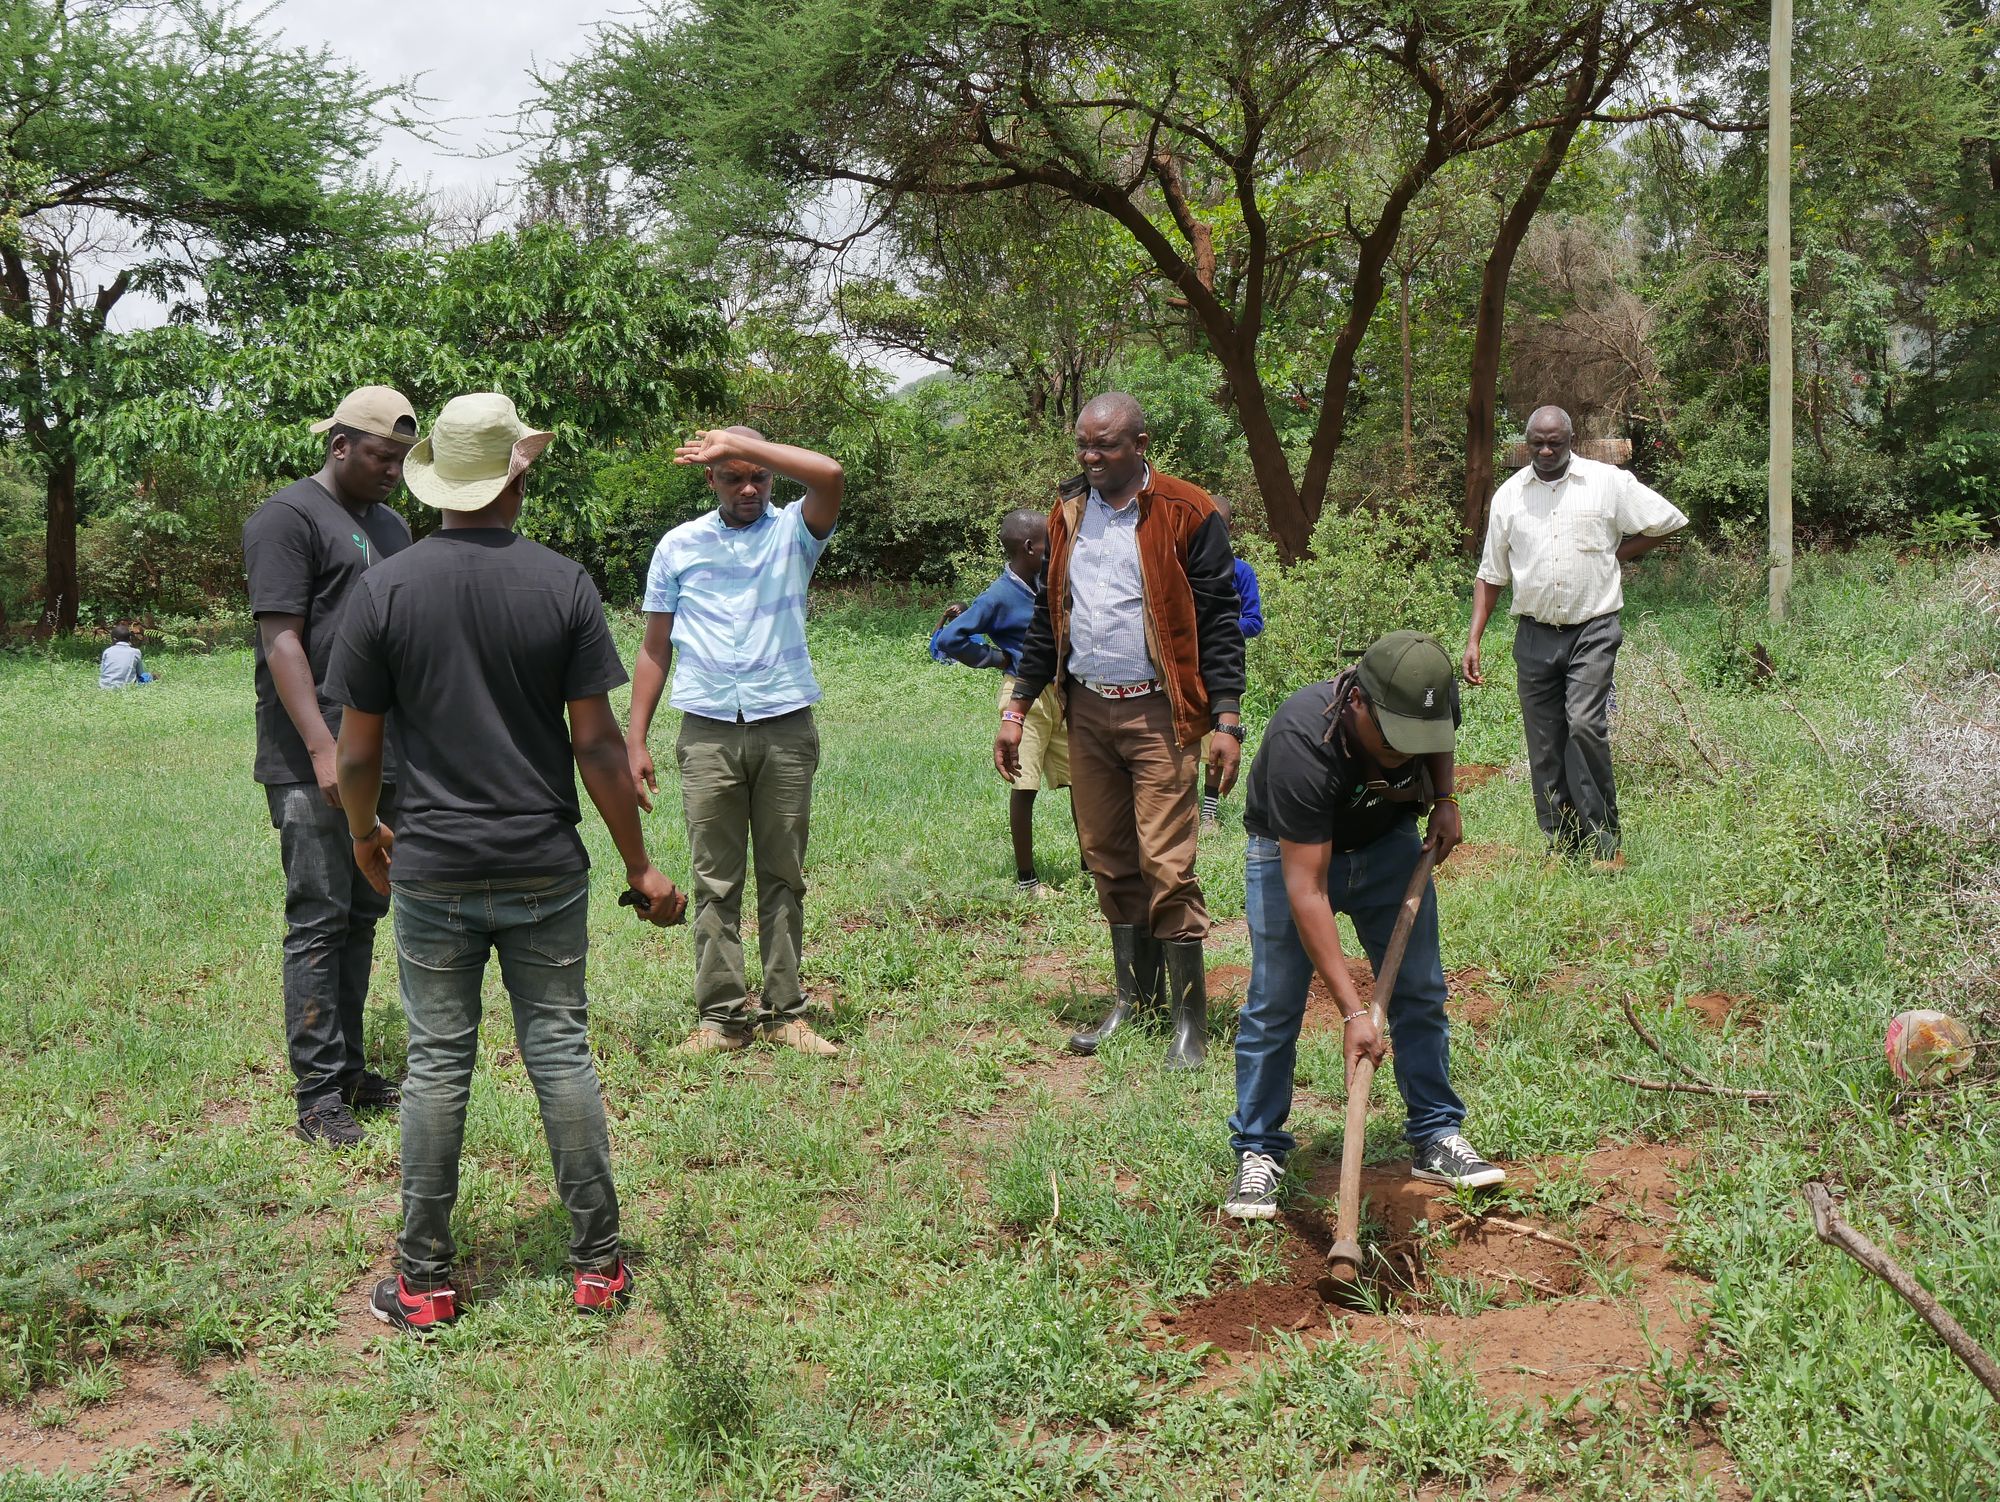 On a mission to make Tingatinga green again